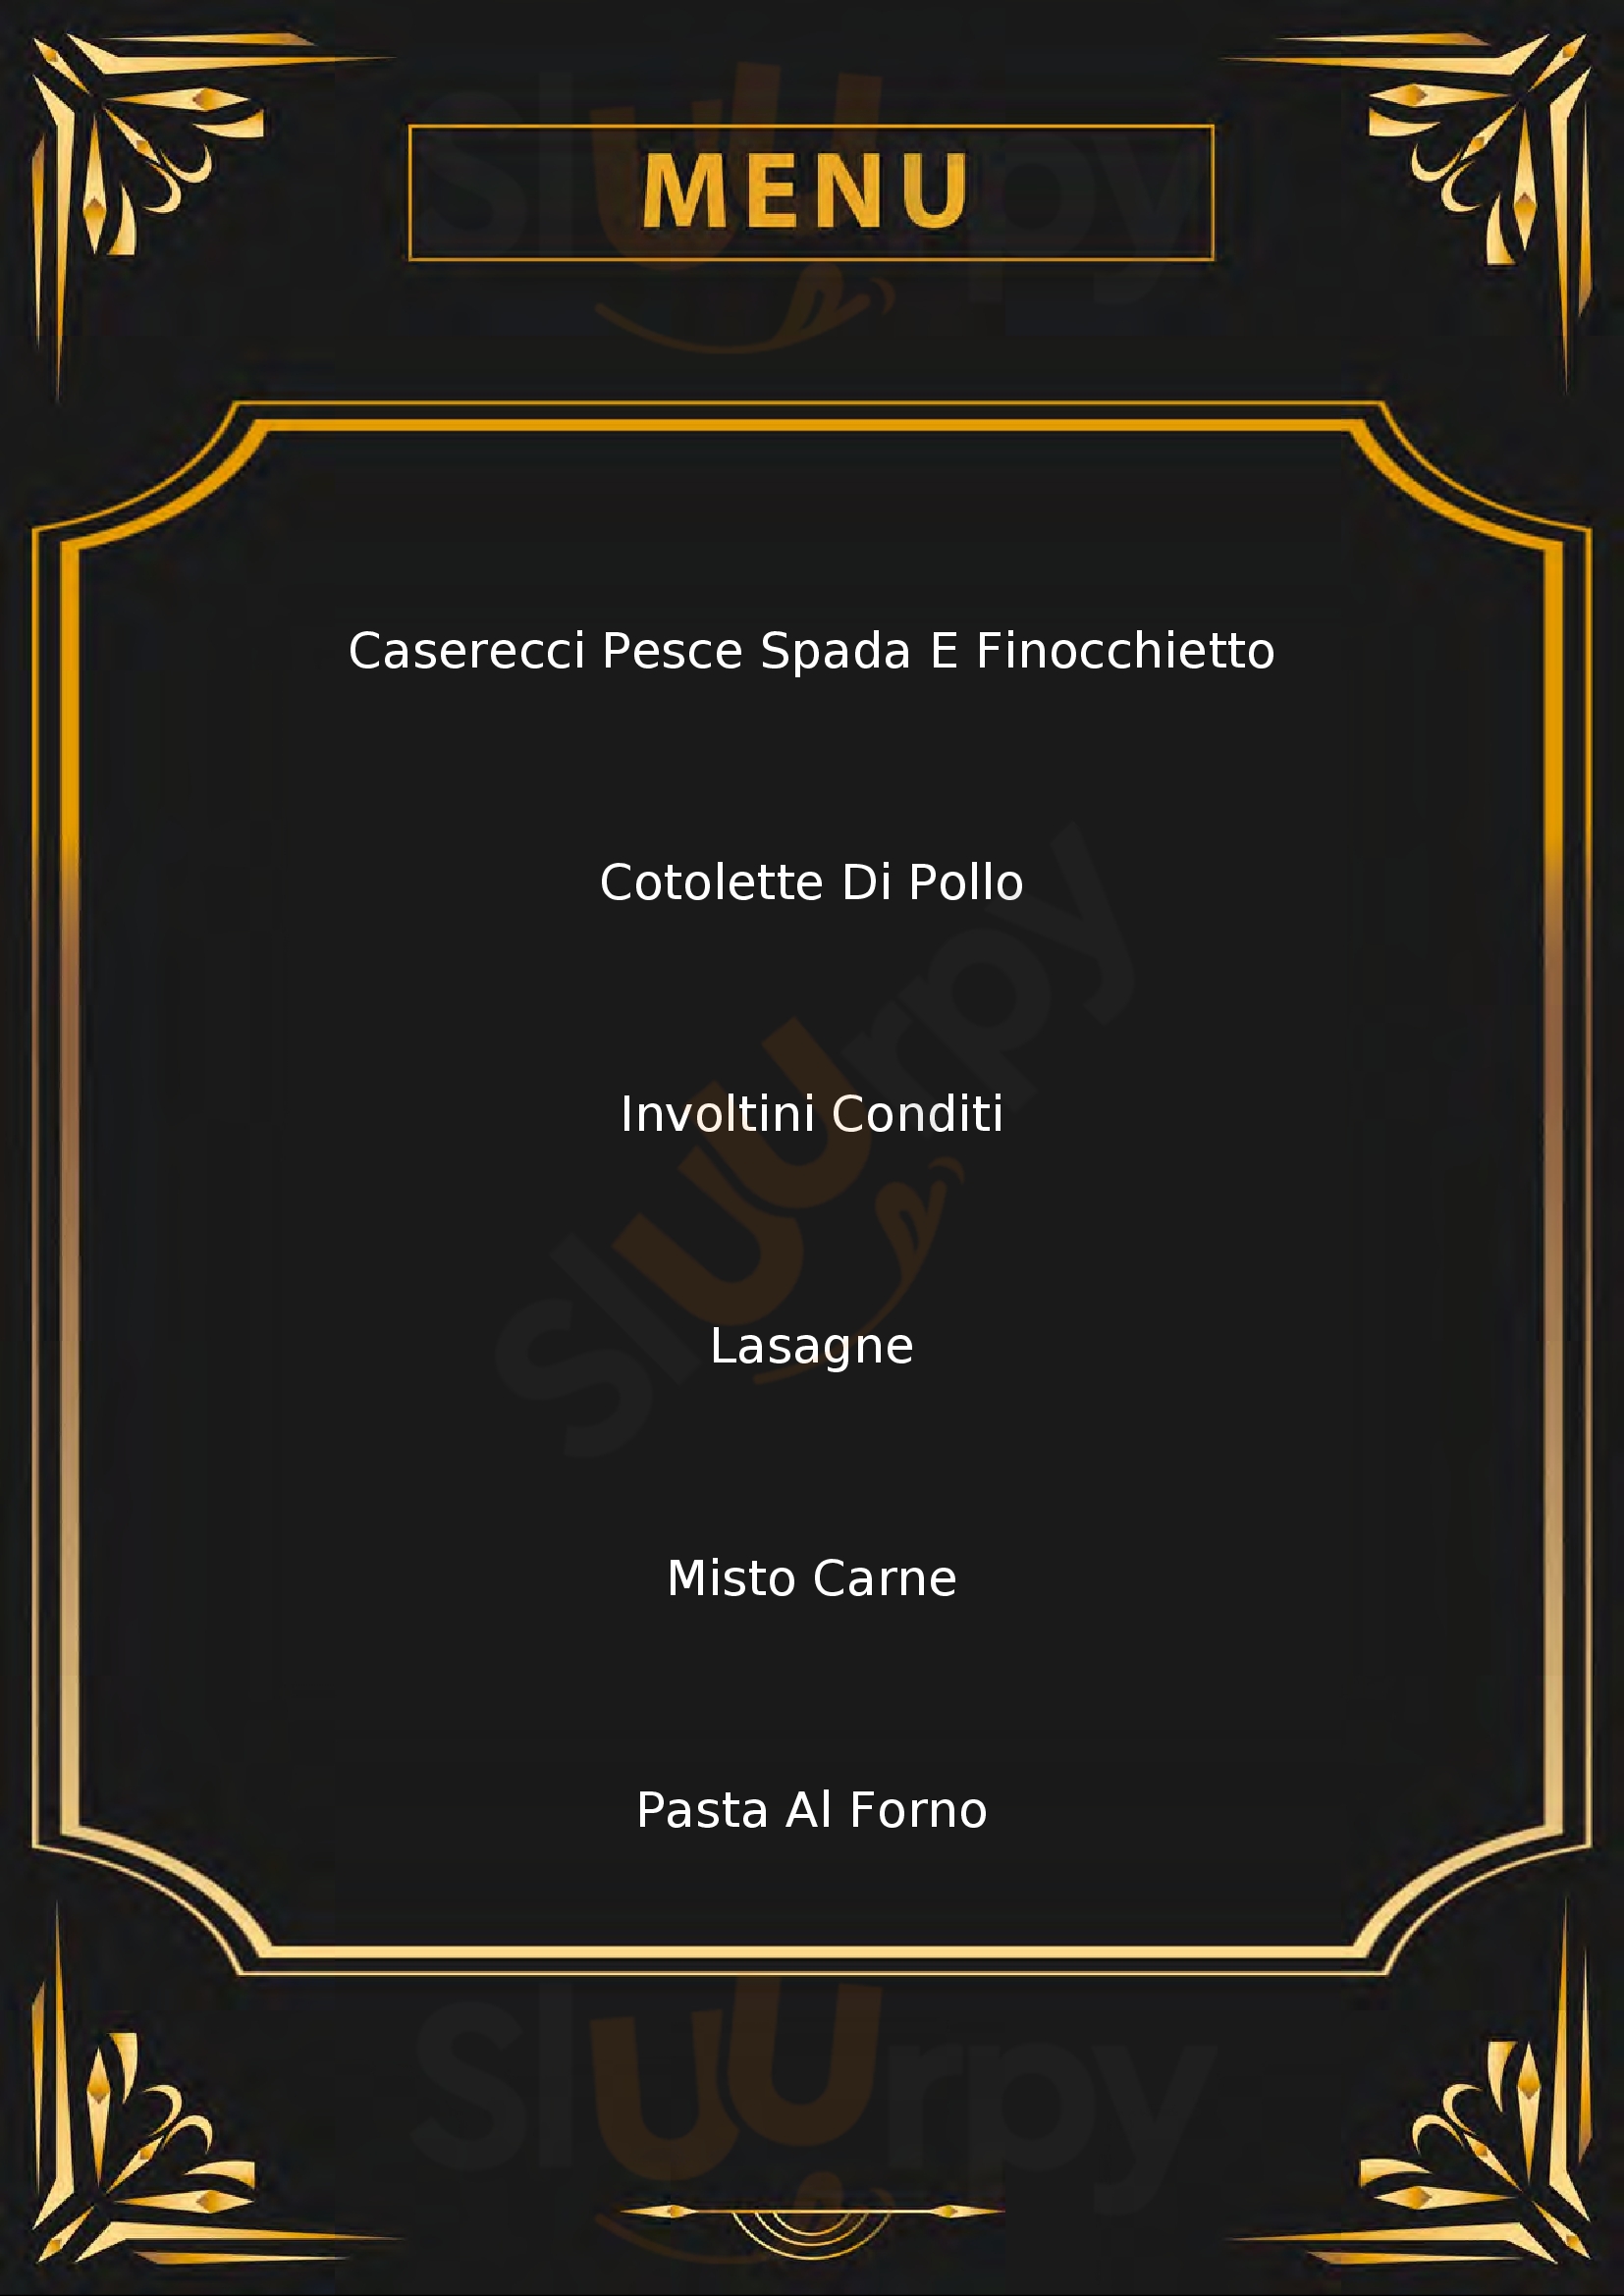 I Siculi Gastronomia Carnezzeria Catania menù 1 pagina